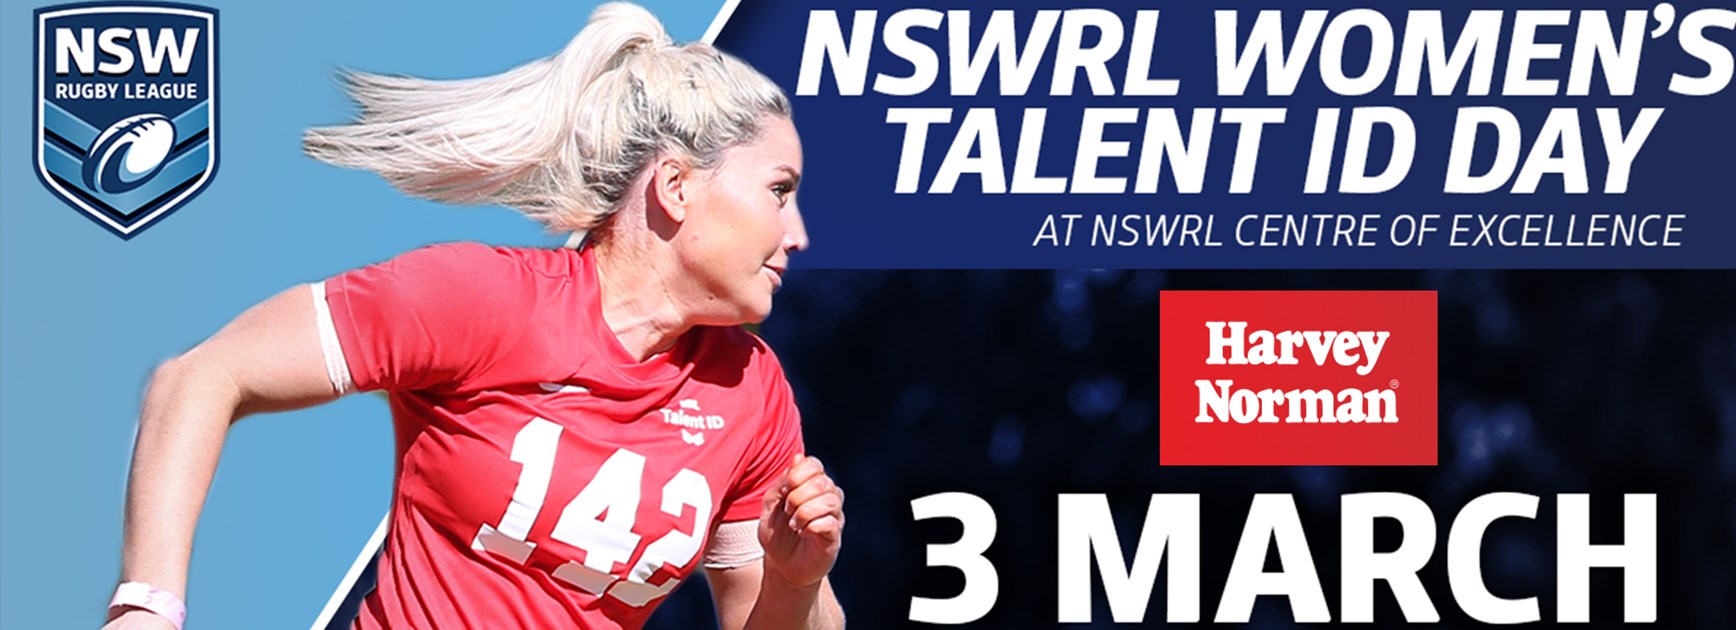 Register for the NSWRL Women's Talent ID